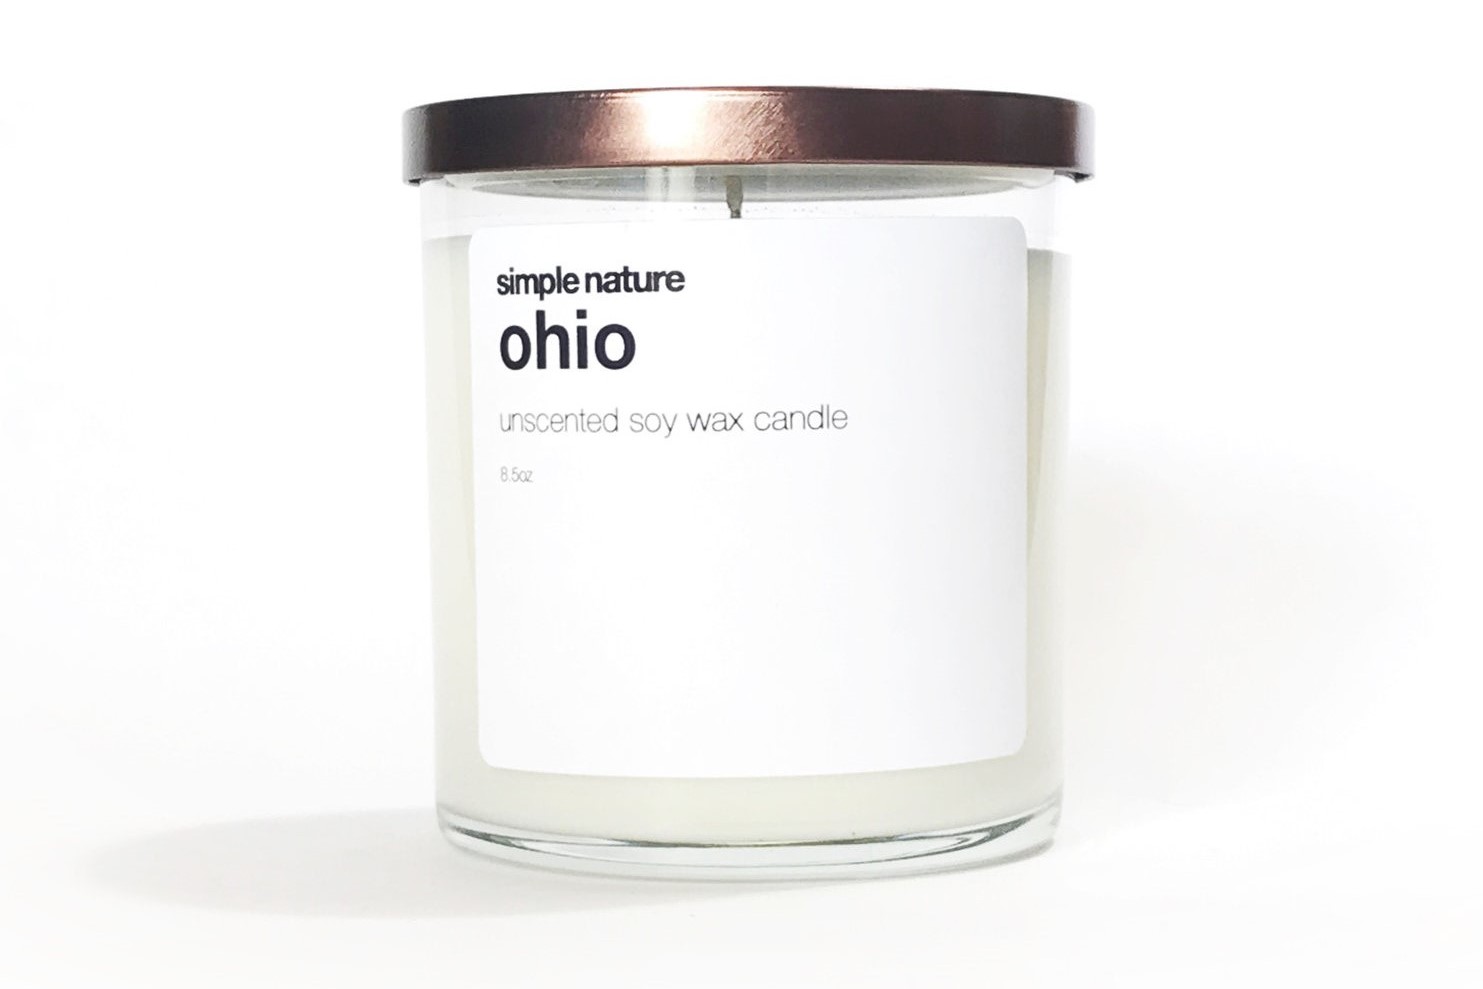 Ohio candle